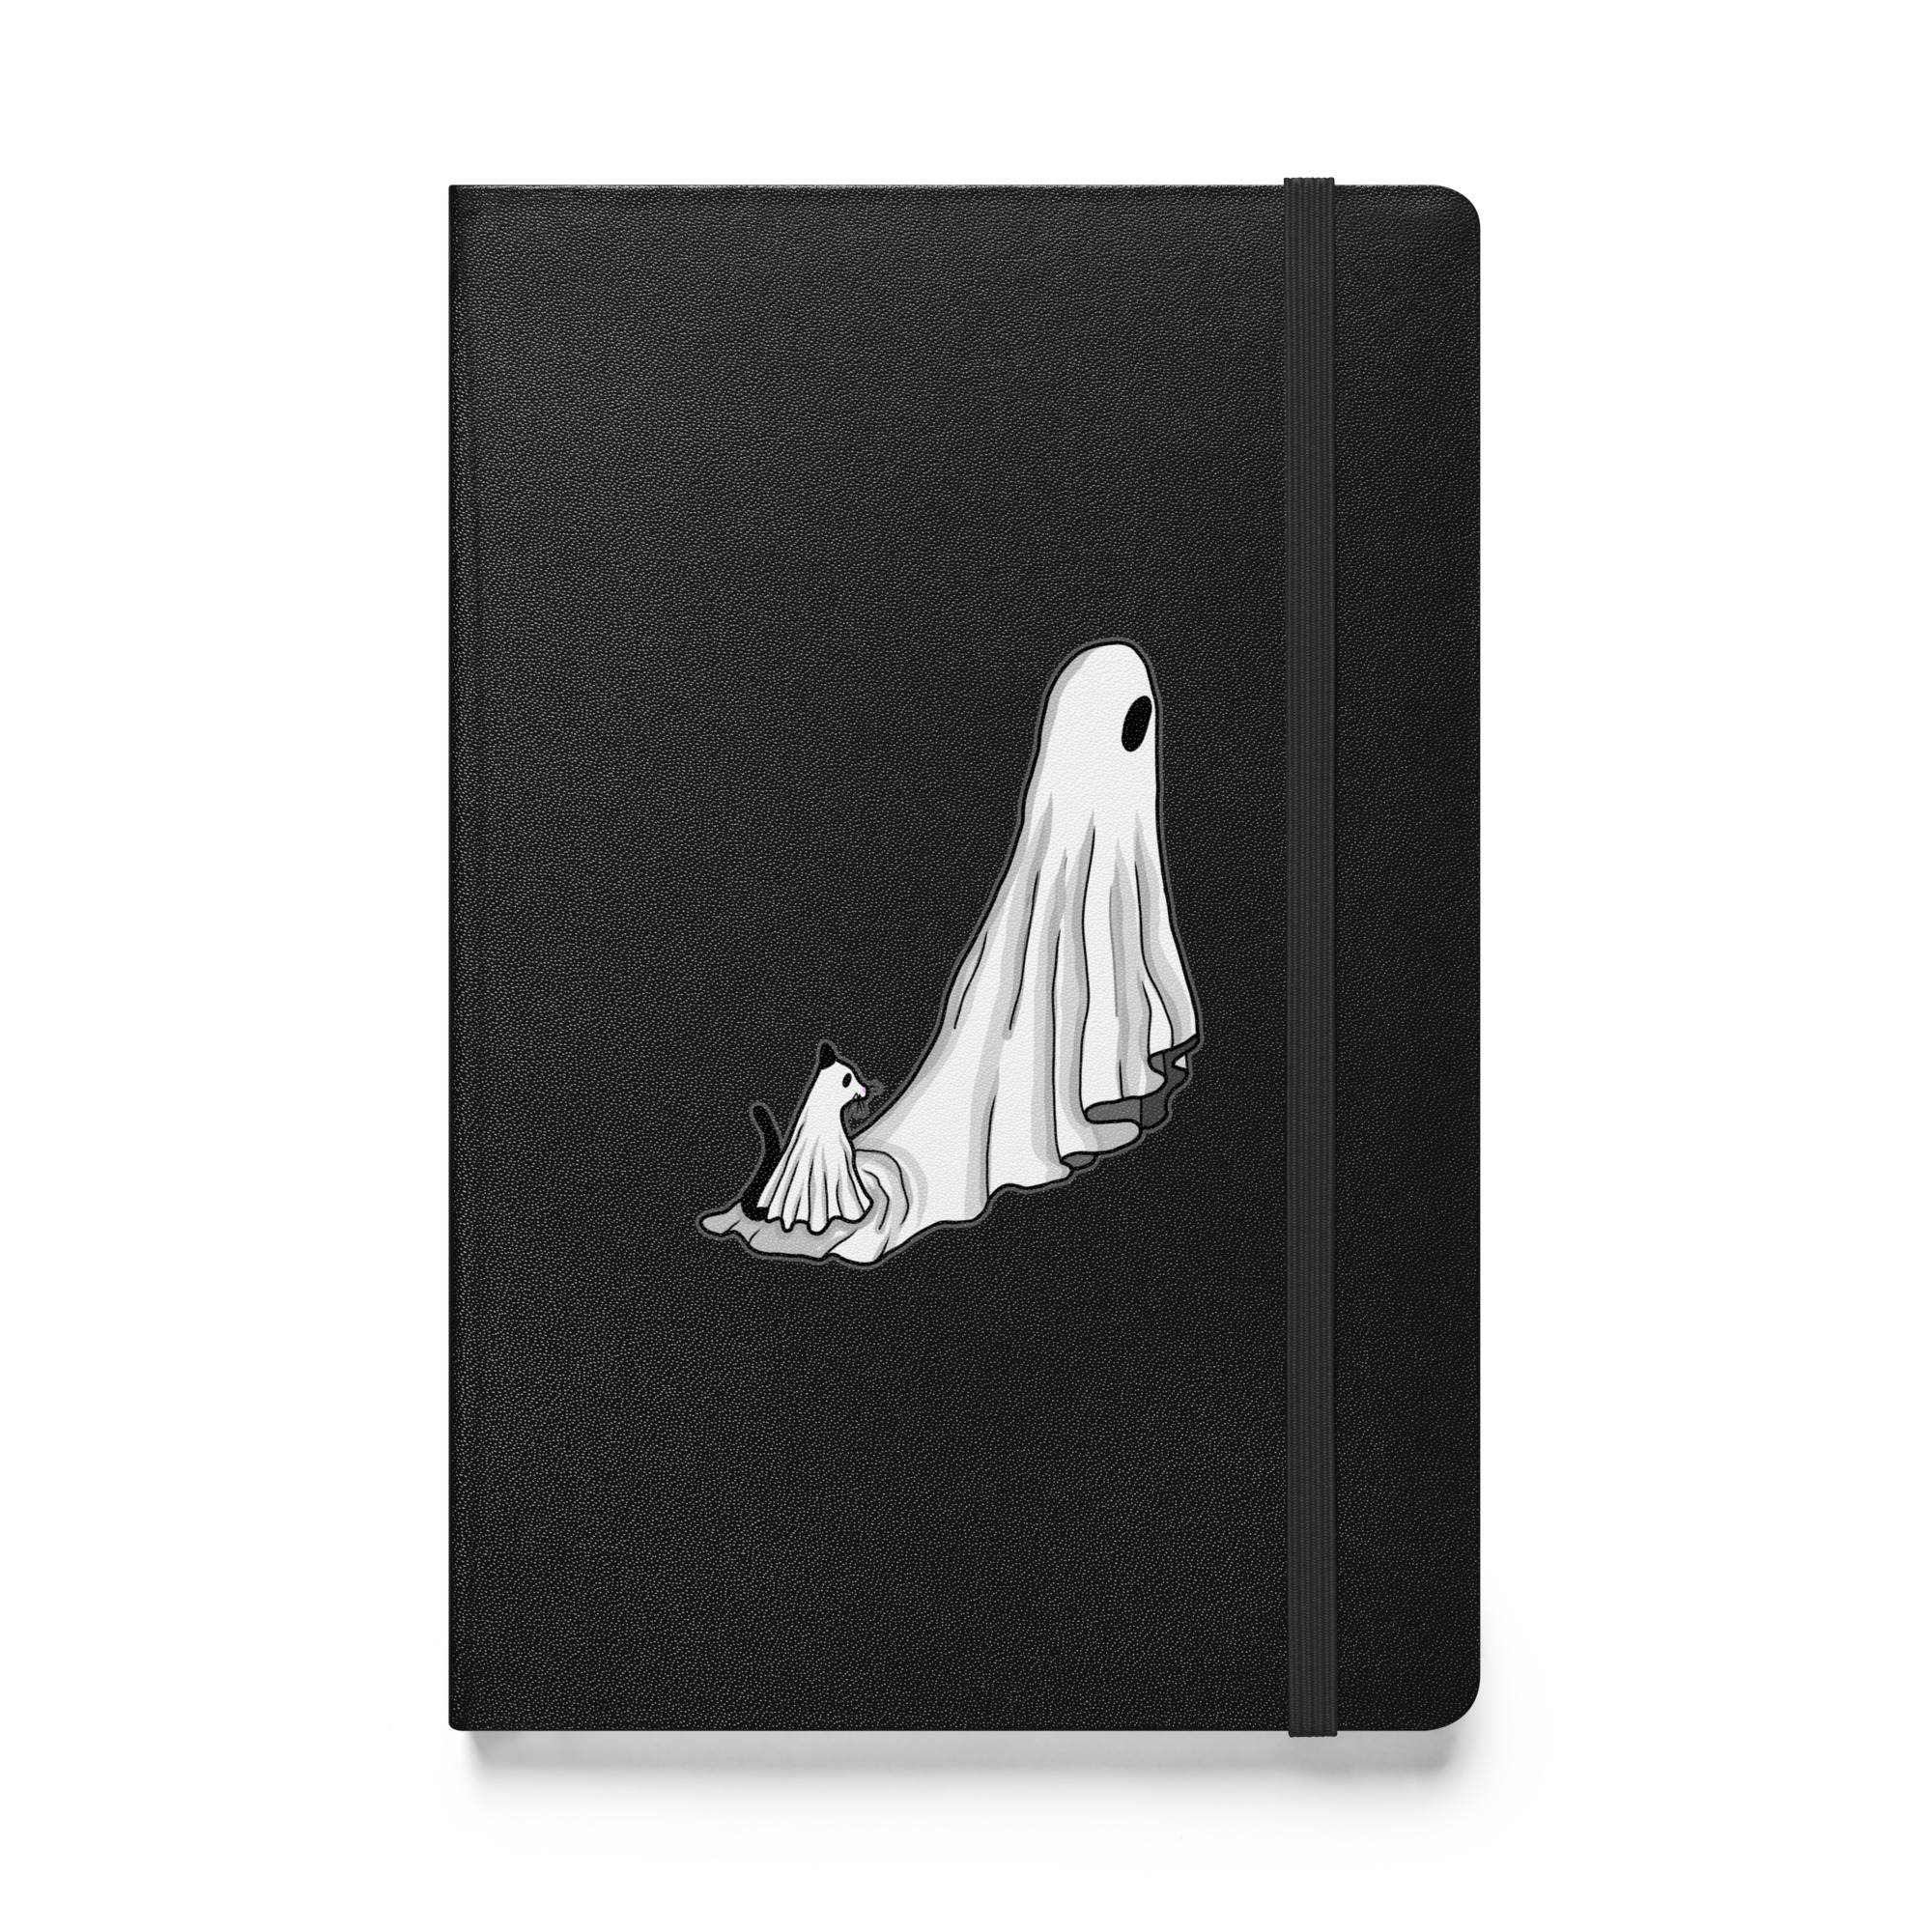 hardcover-bound-notebook-black-front-6537e8d8bd363.jpg